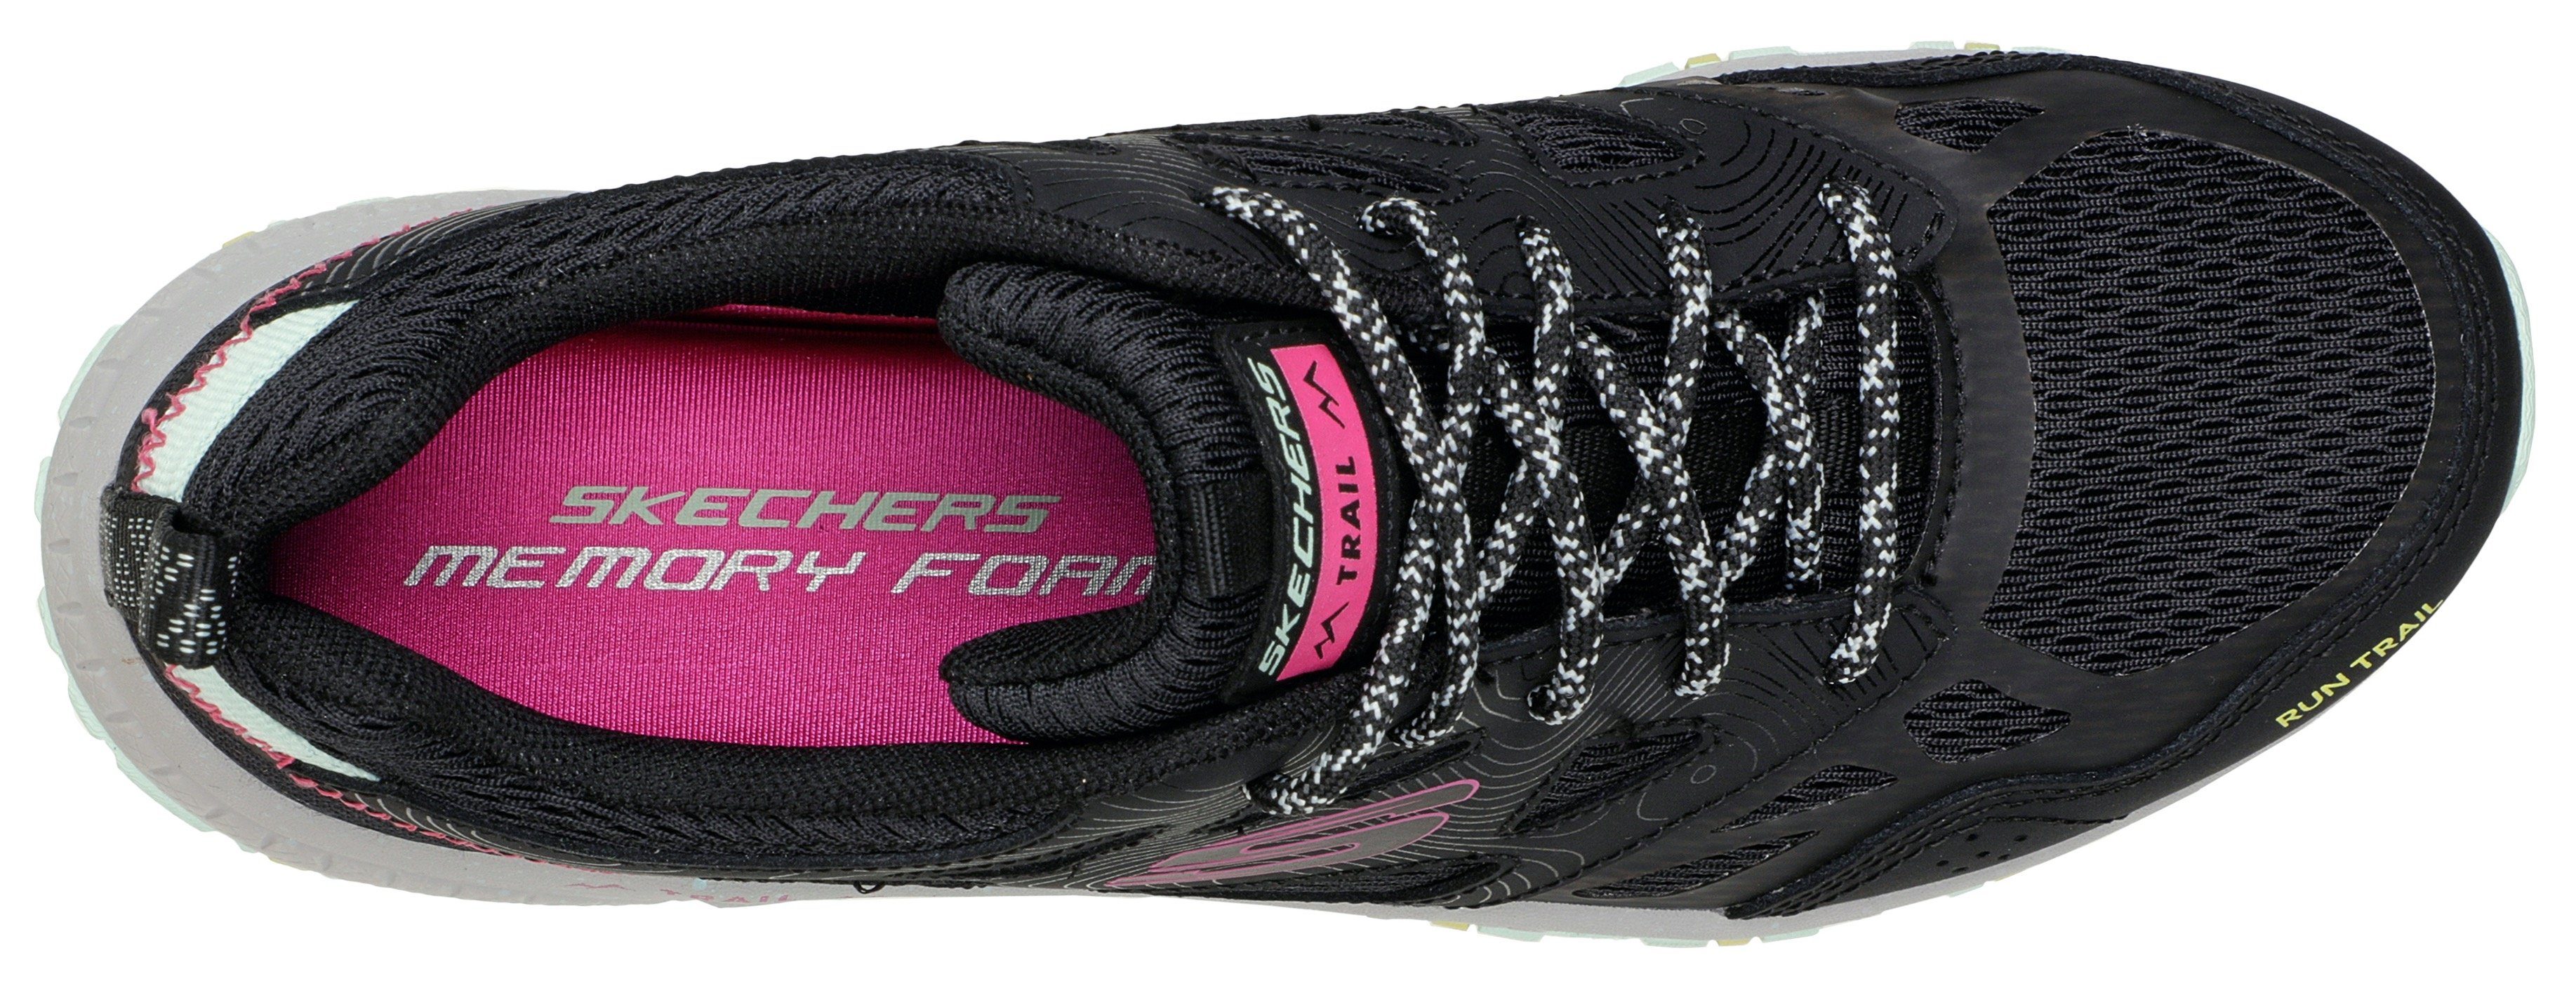 HILLCREST PURE im schwarz-kombiniert ESCAPADE Skechers Sneaker Materialmix